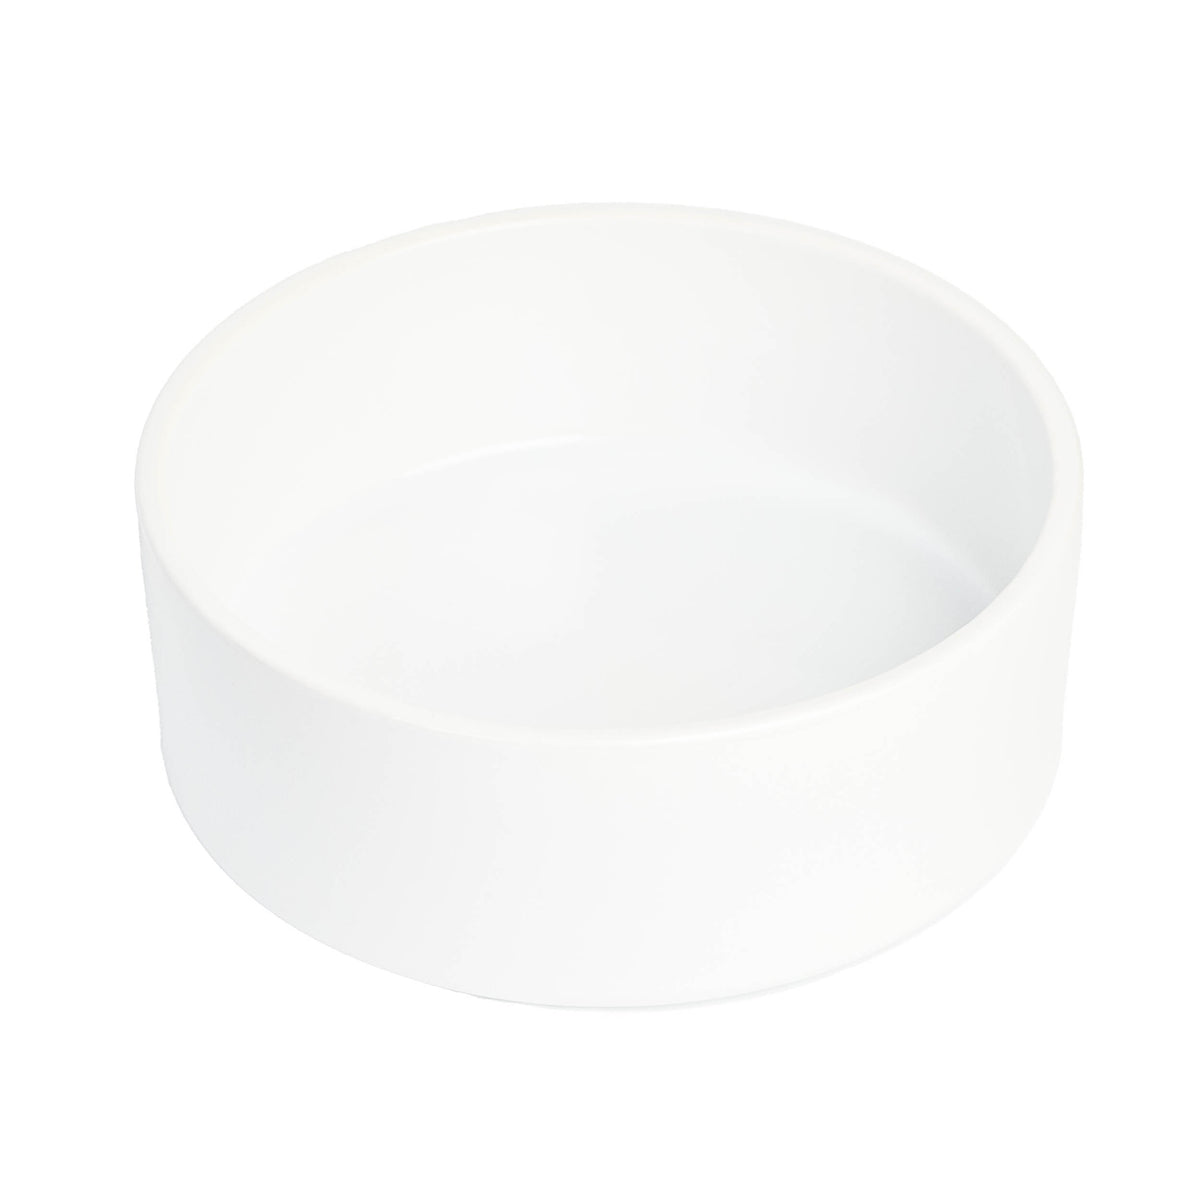 Personalised bowl for dogs / ceramic - 22oz 650ml (design 6)